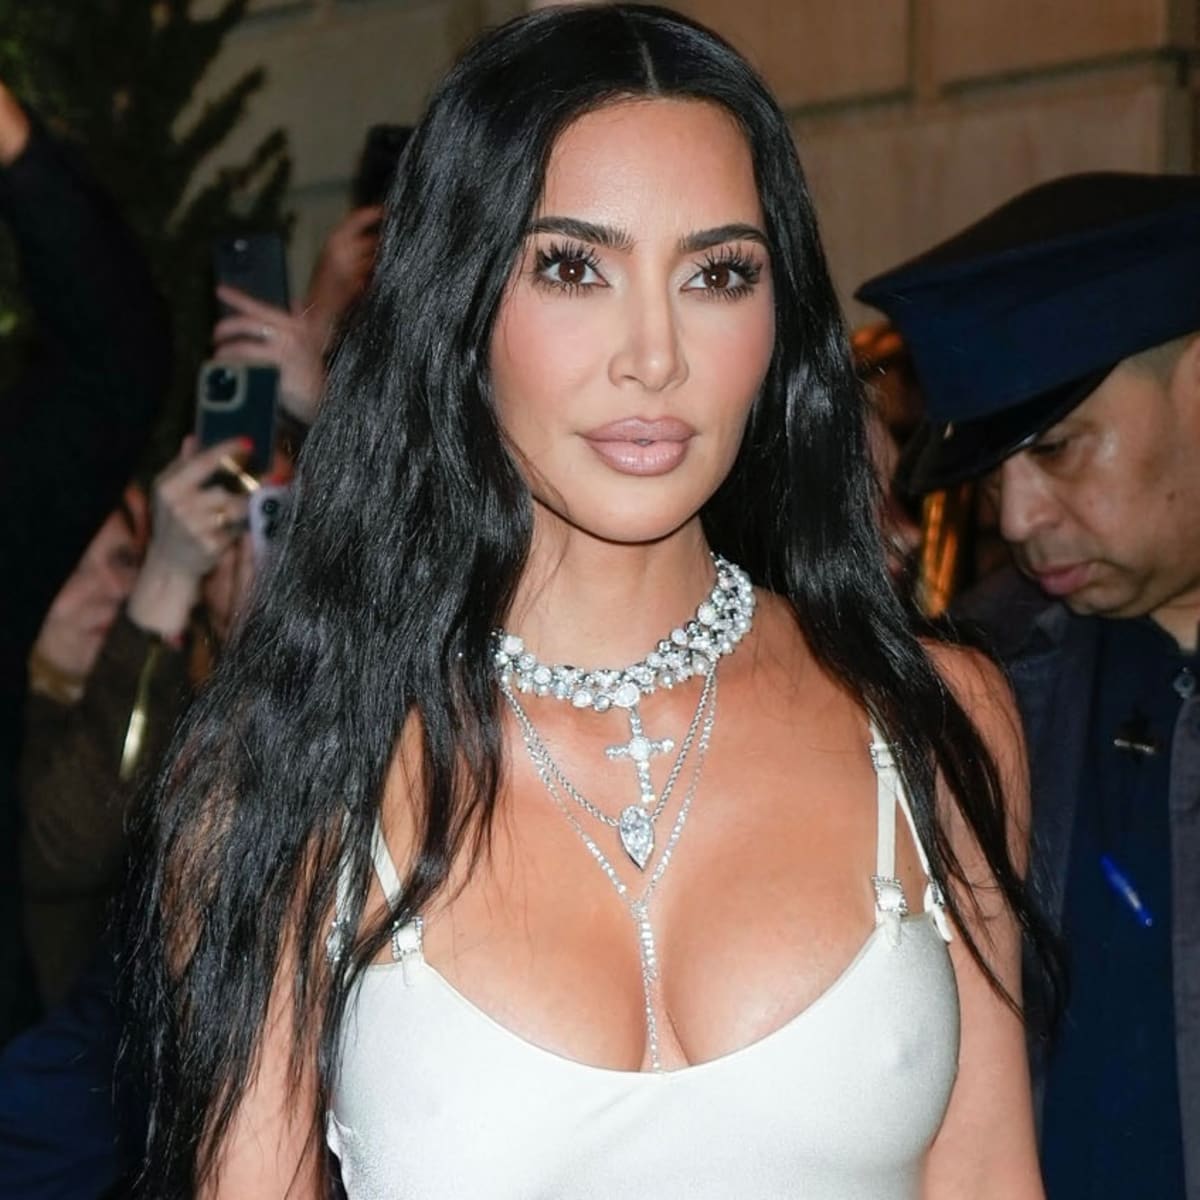 Kim Kardashian Models New SKIMS Bra with Built-in Nipple: WATCH